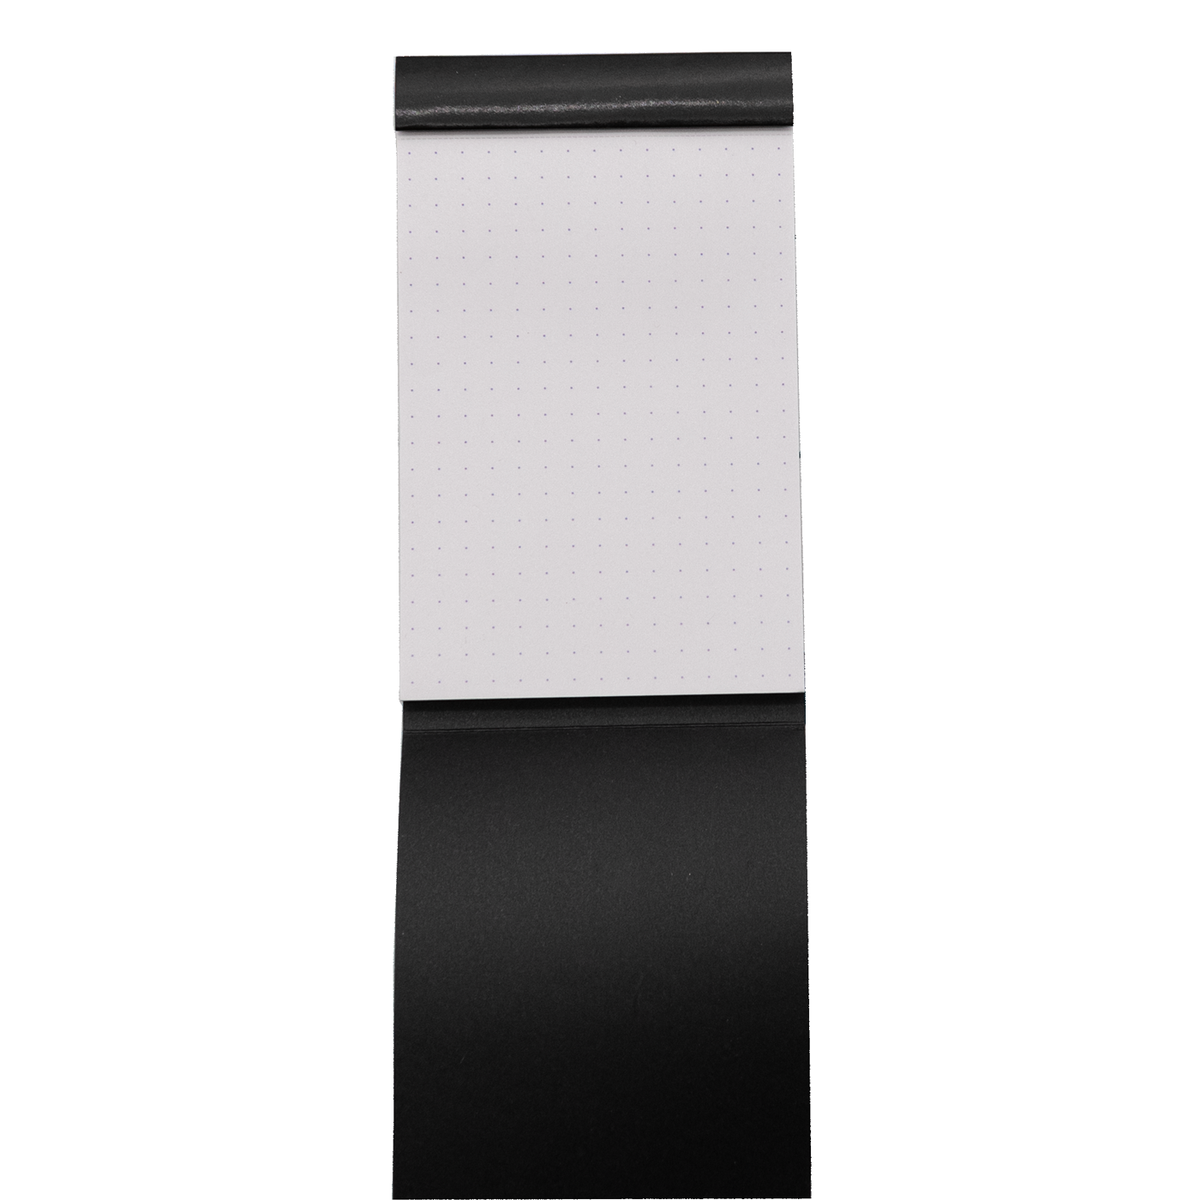 Rhodia Pocket Notepad 3"x4.75" Dot Grid